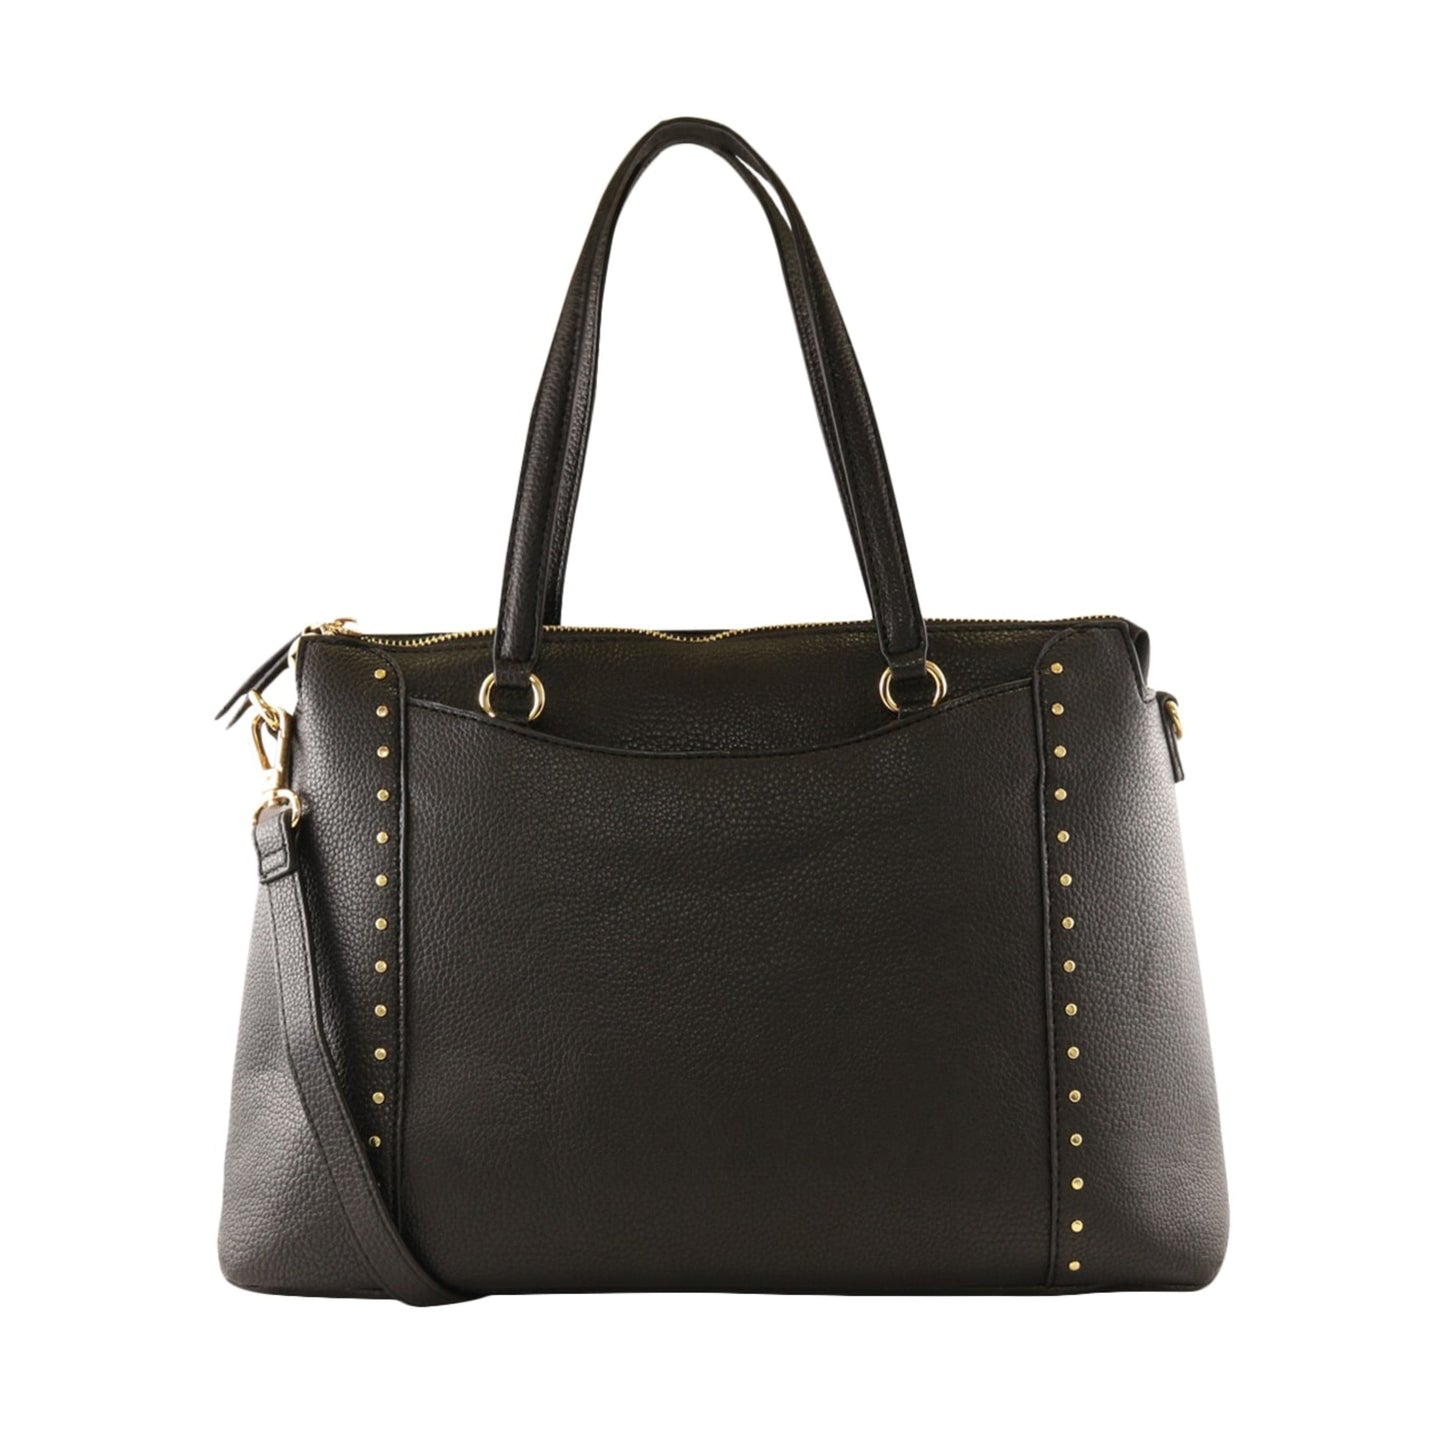 KELLY & KATIE Women Bags Black KELLY & KATIE - Women's Faux Leather Viana Satchel with Mini Goldtone Studs